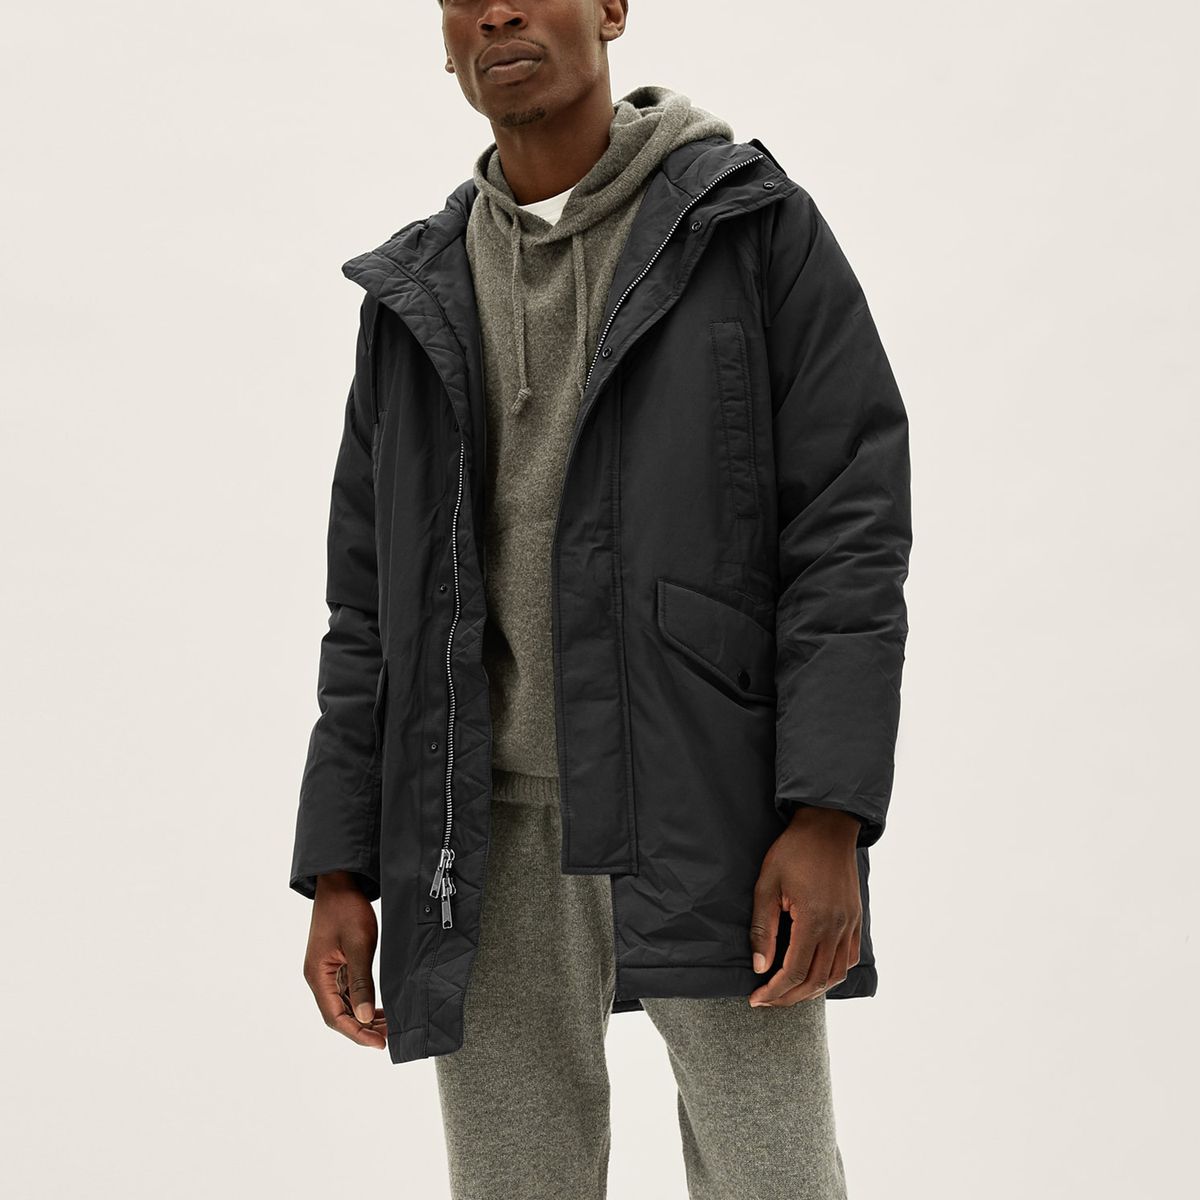 Men's Winter Thicken Puffer Hooded Jackets Leisure Solid Color Long Sleeve Zip Up Hoodies Lightweight Comfy Warm Coat